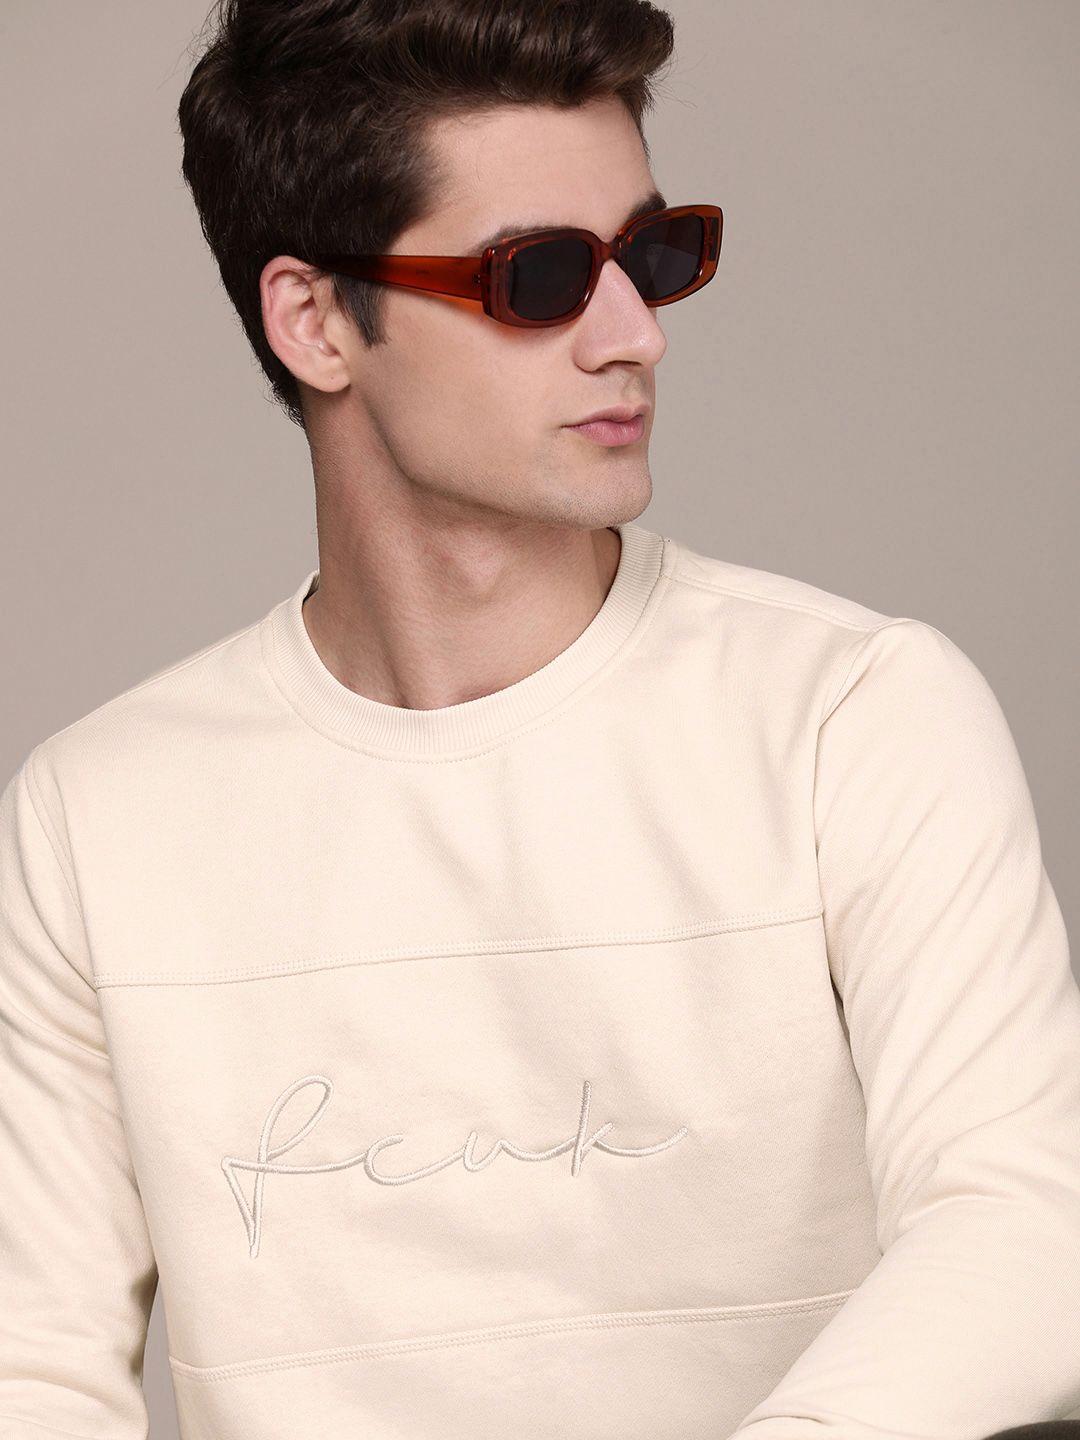 fcuk brand logo embroidered pullover sweatshirt